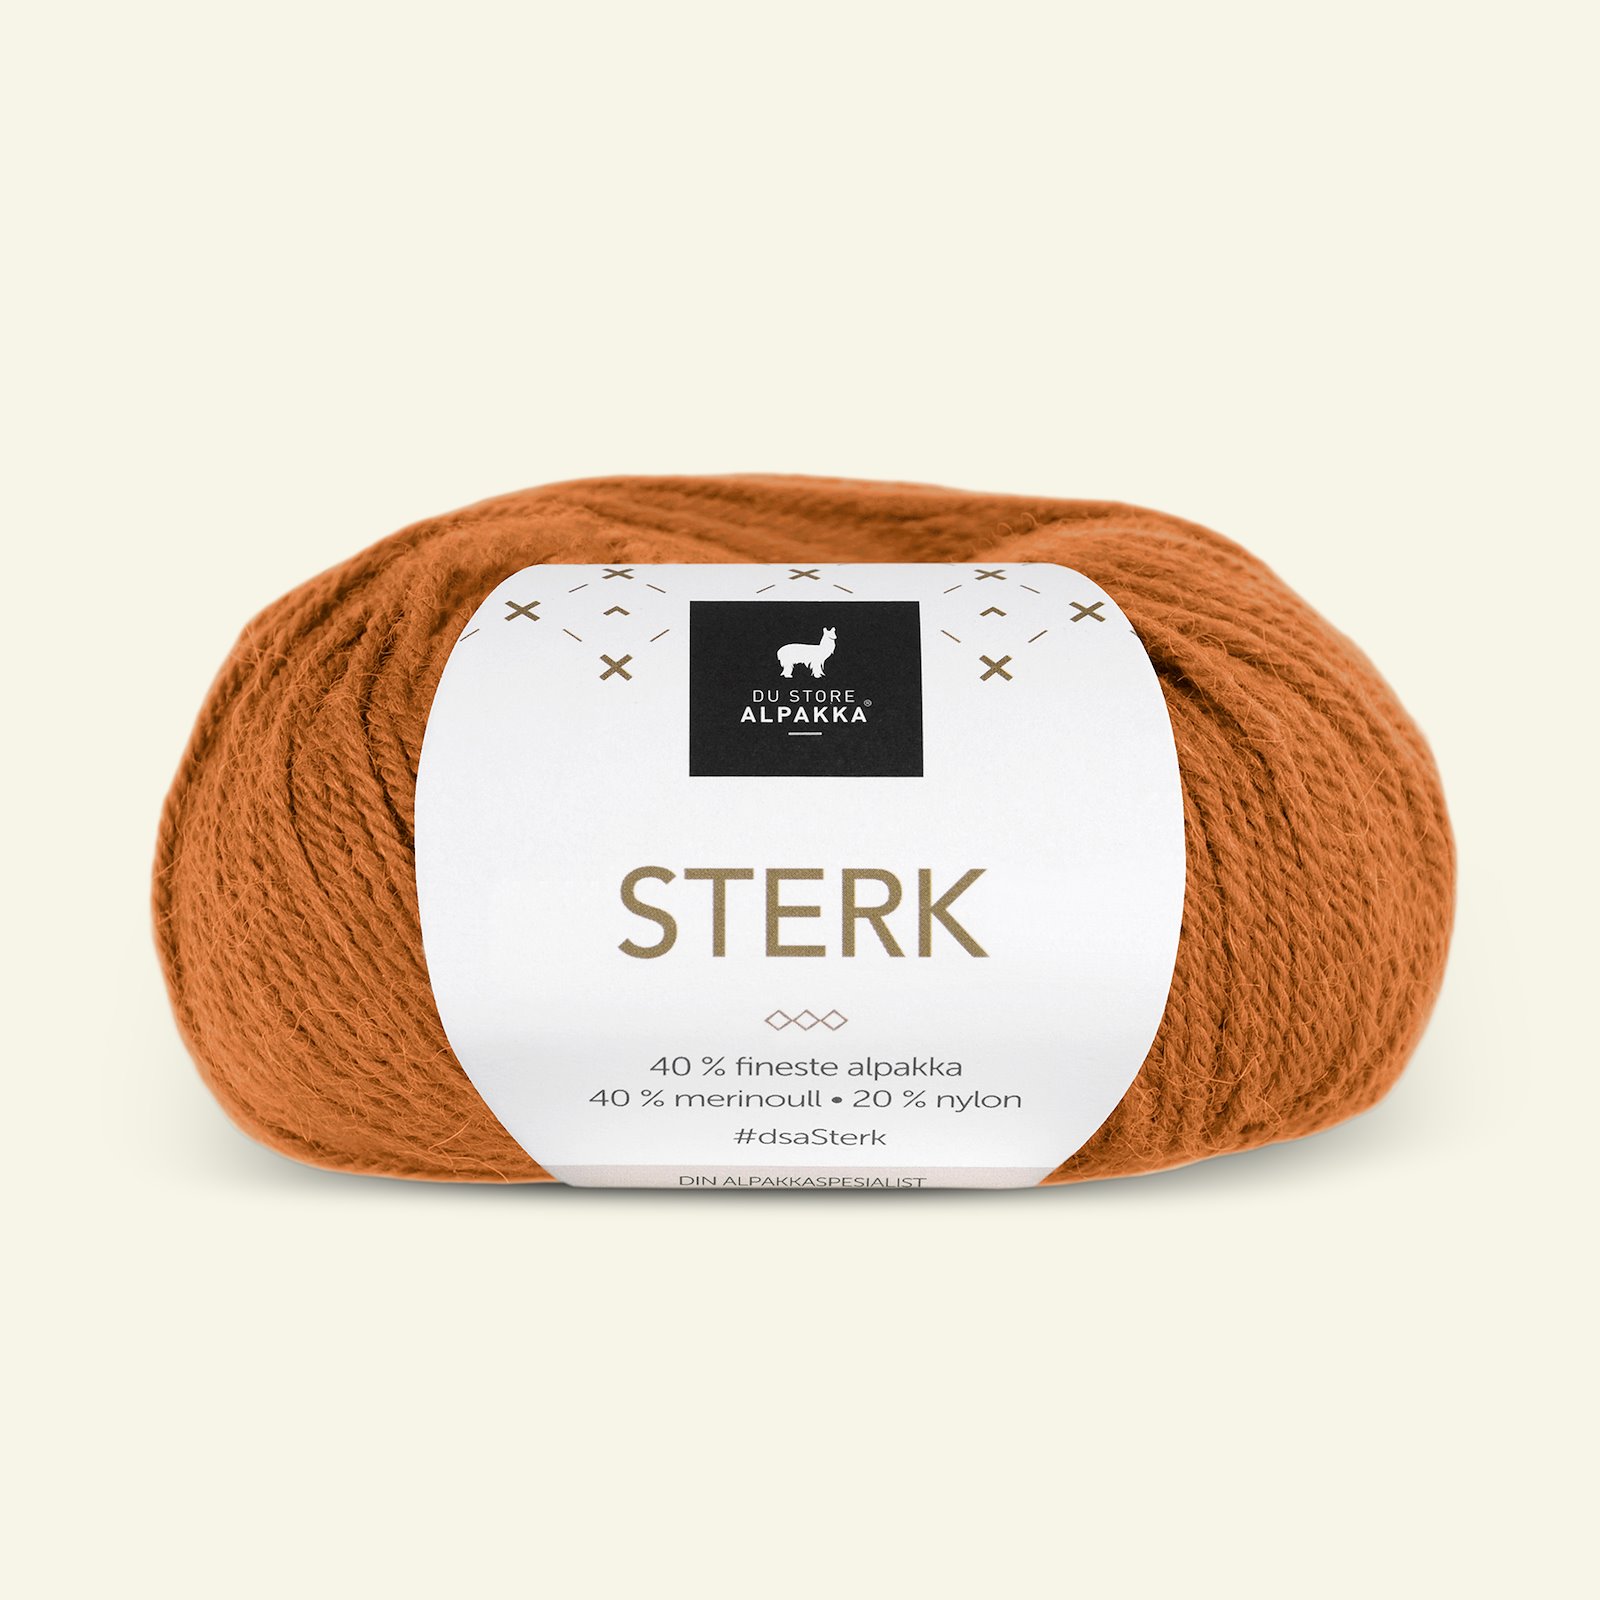 Du Store Alpakka, alpaca merino mixed yarn "Sterk", saffron yellow (858) 90000681_pack